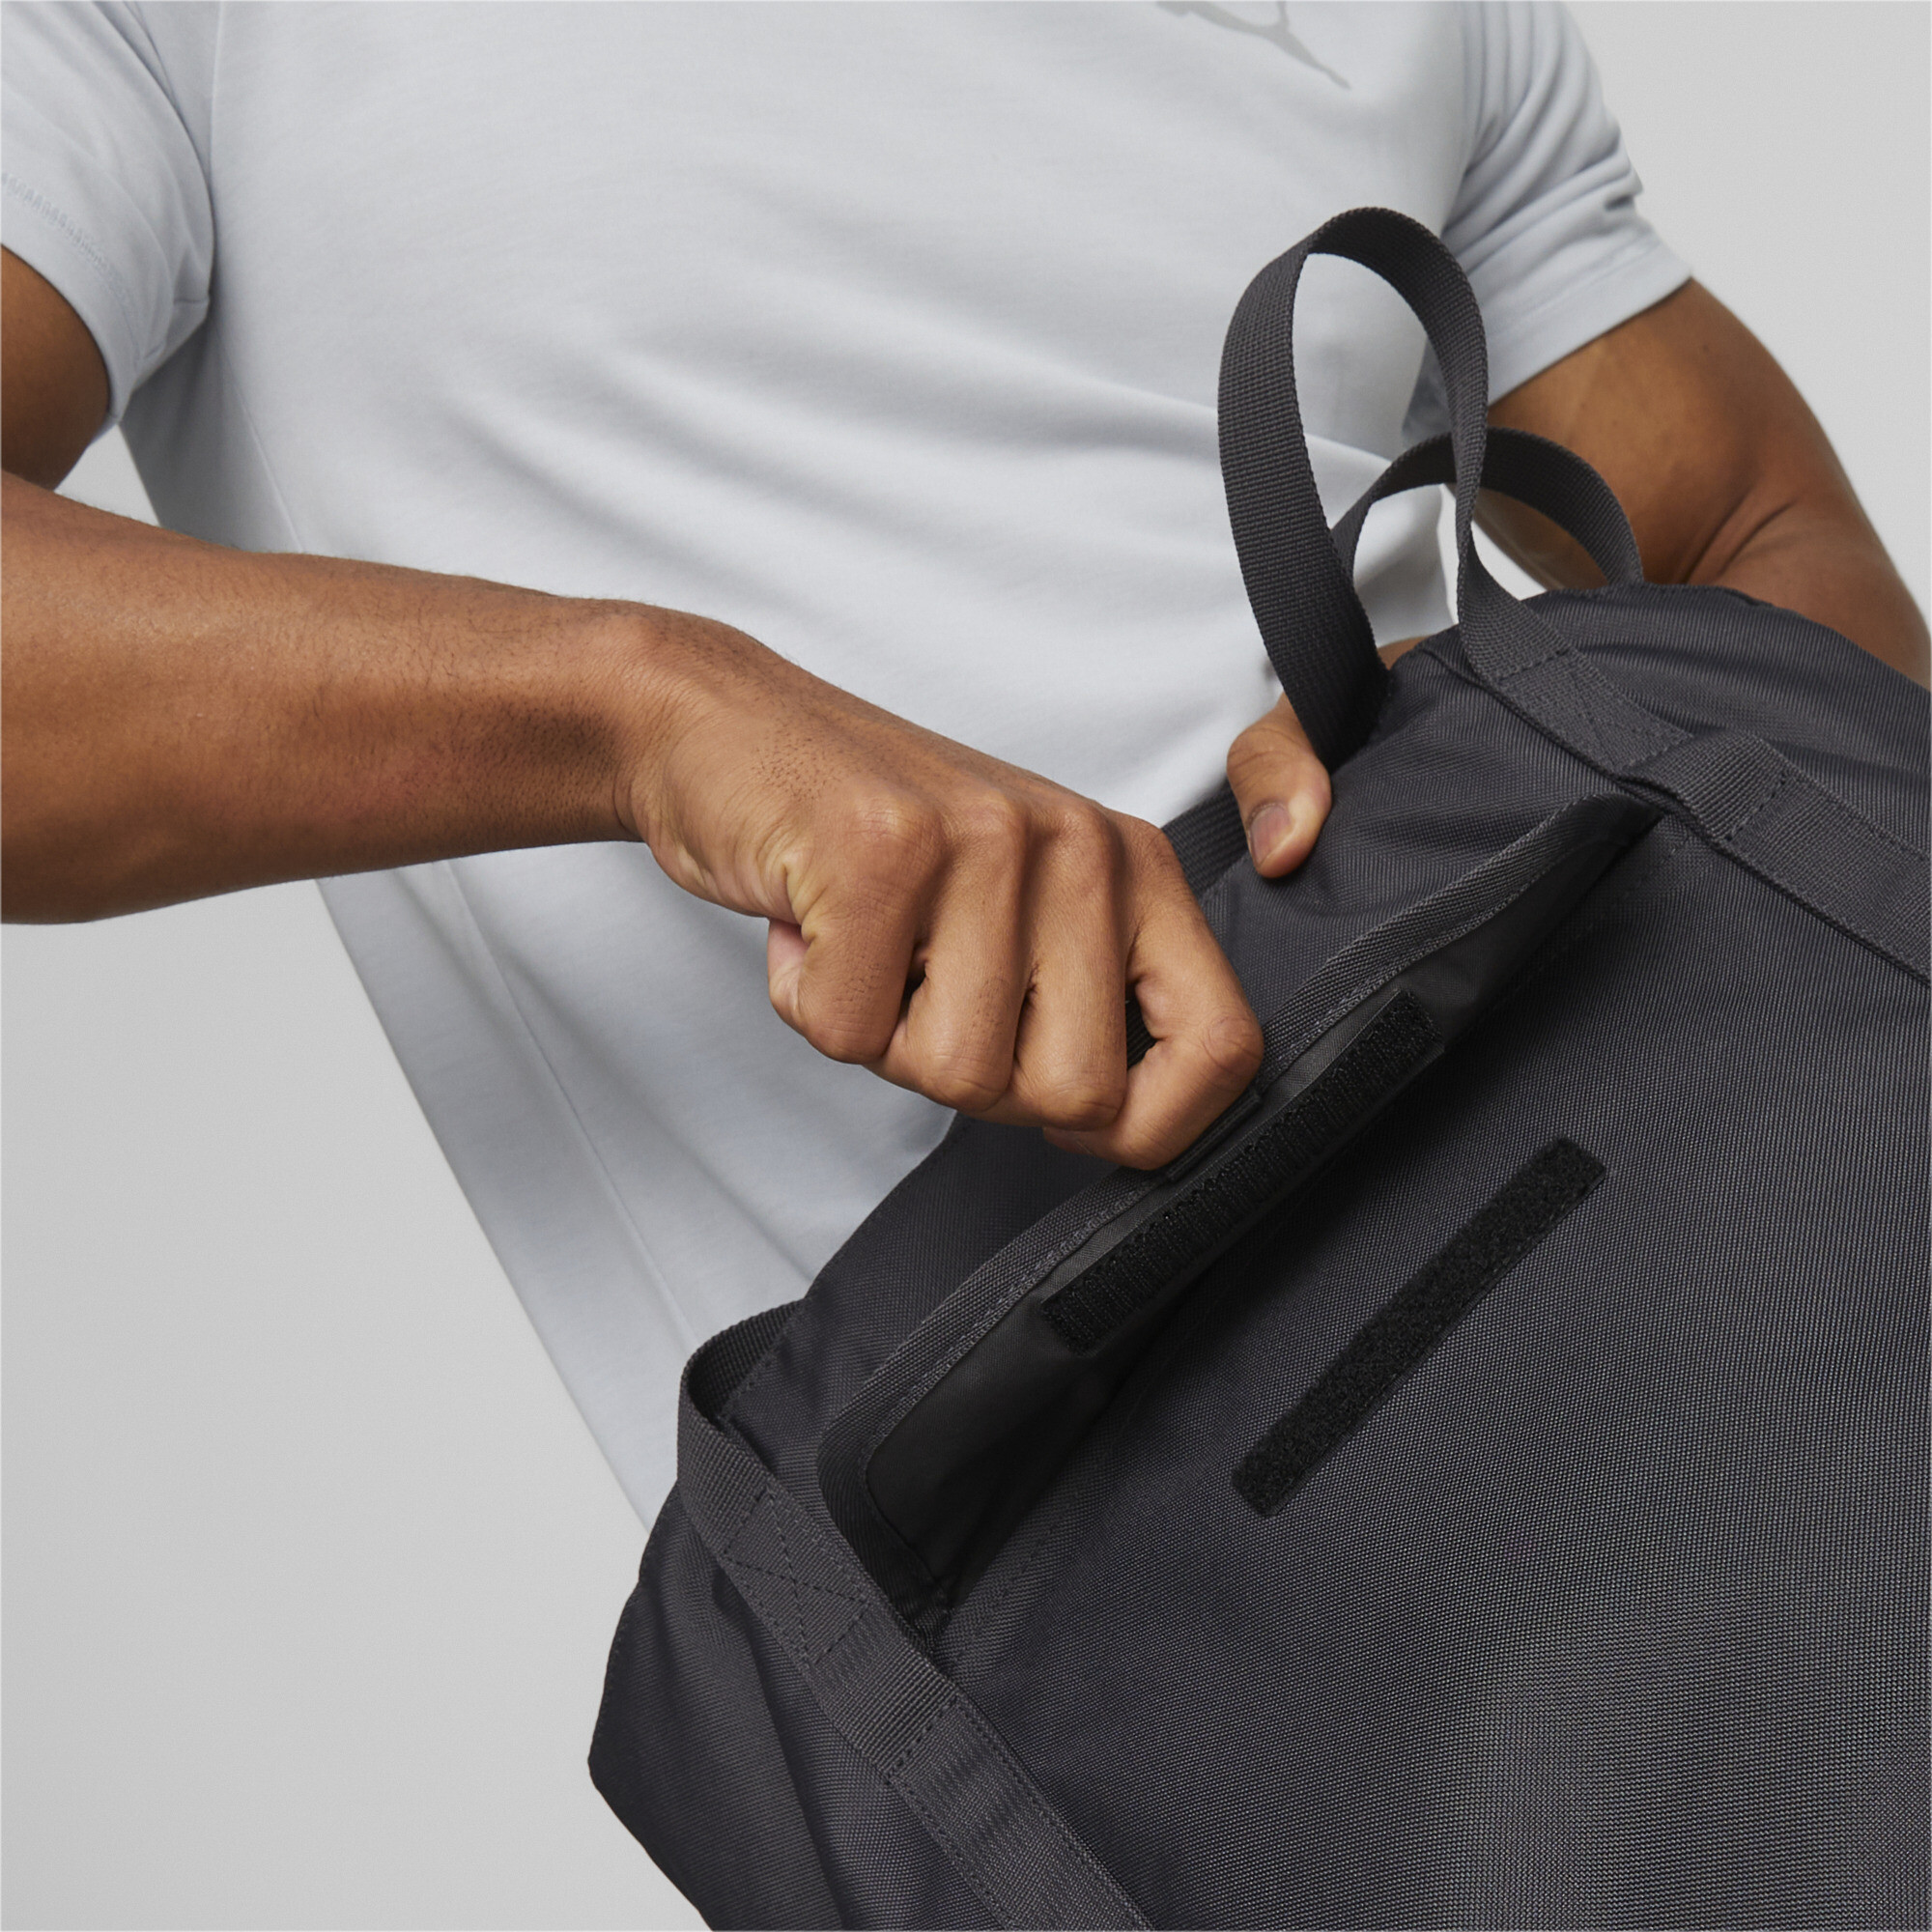 Men's PUMA Better Tote Bag In Gray